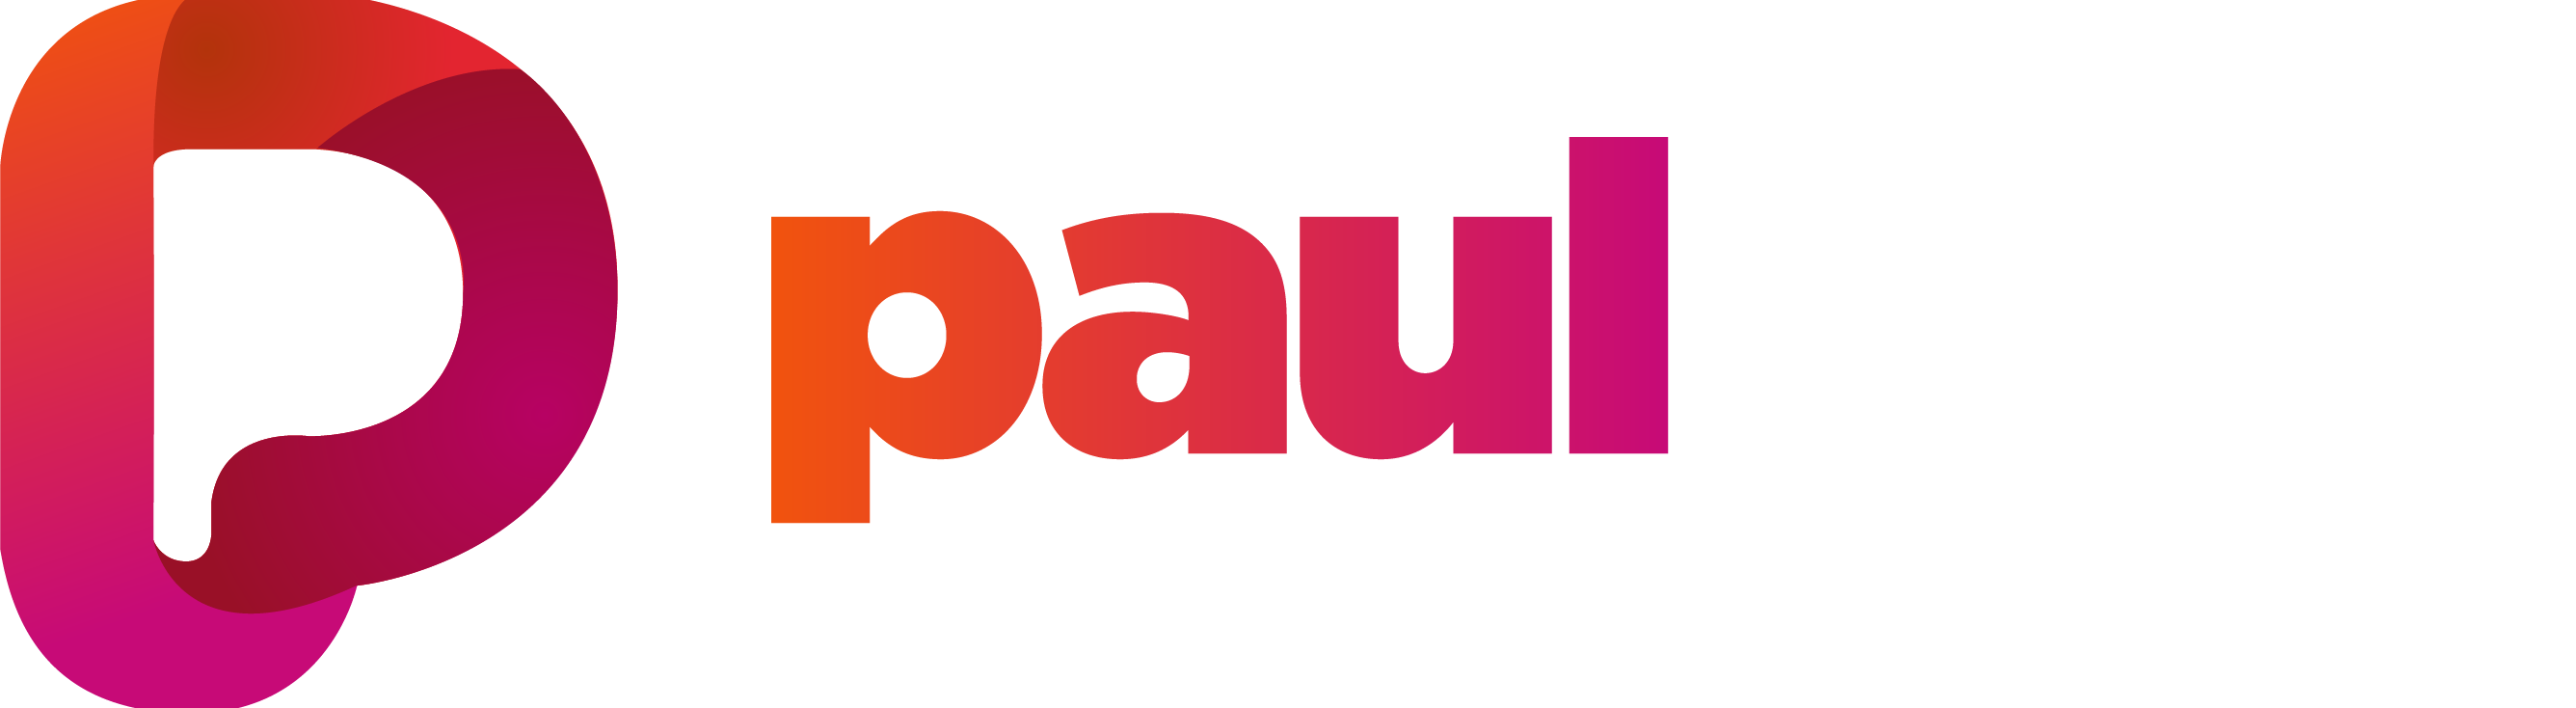 Paul Kelly Graphic Design